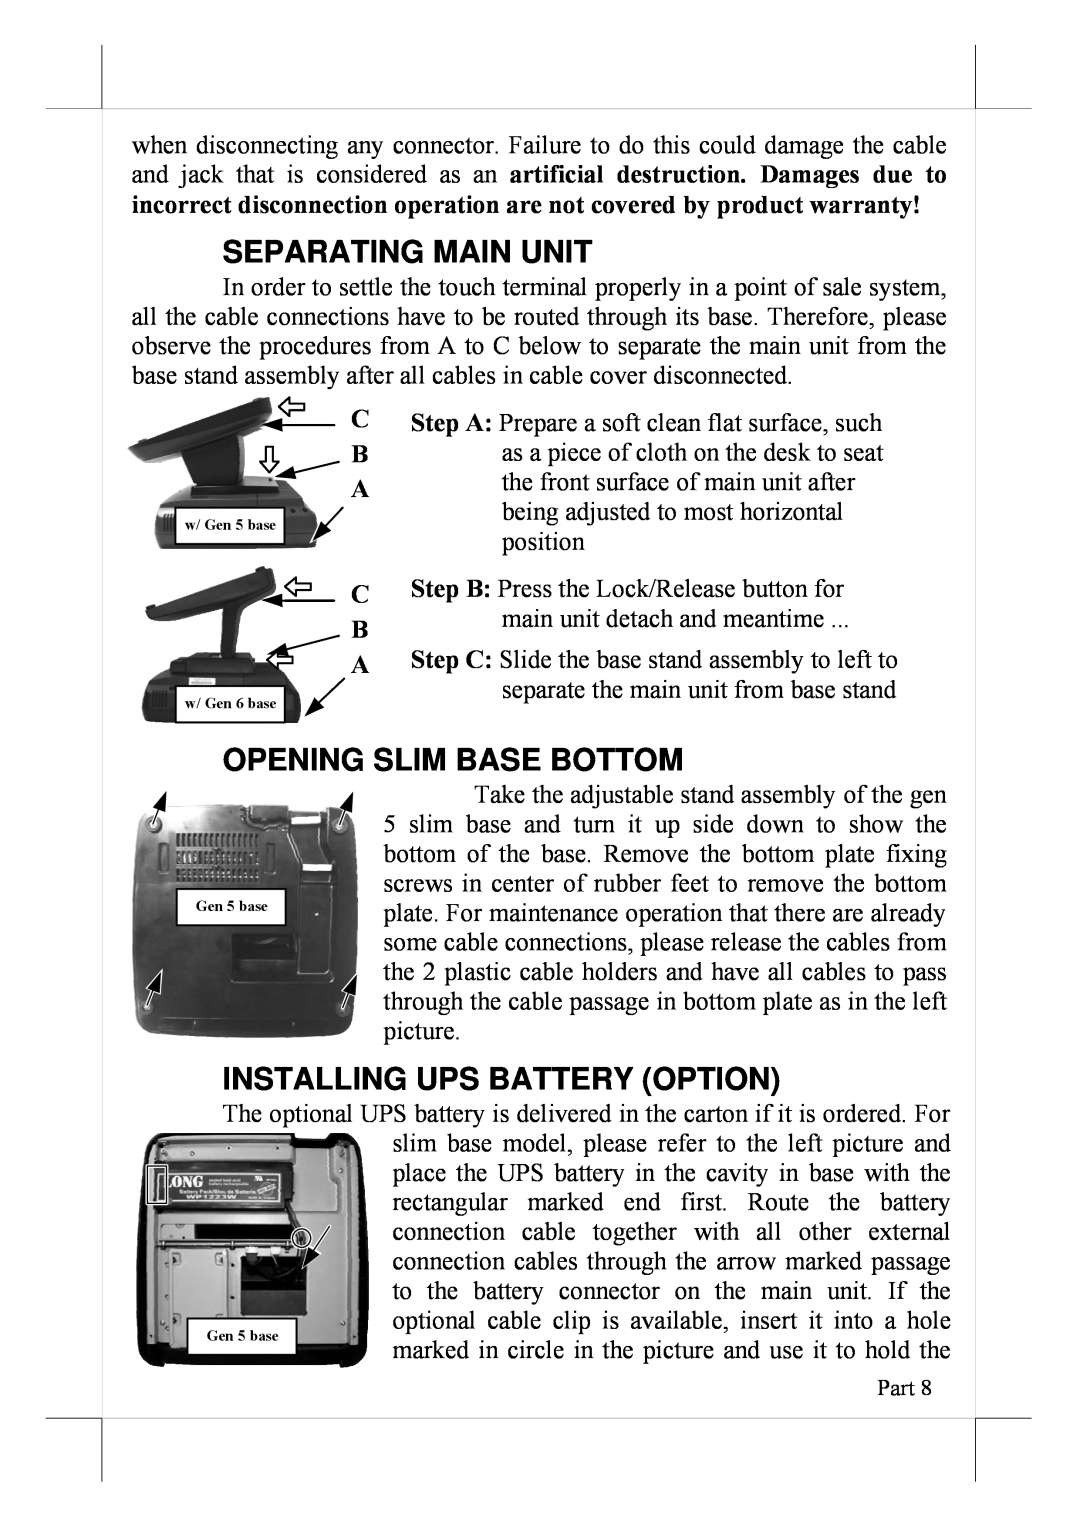 POSIFLEX Business Machines 16560900020 Separating Main Unit, Opening Slim Base Bottom, Installing Ups Battery Option 